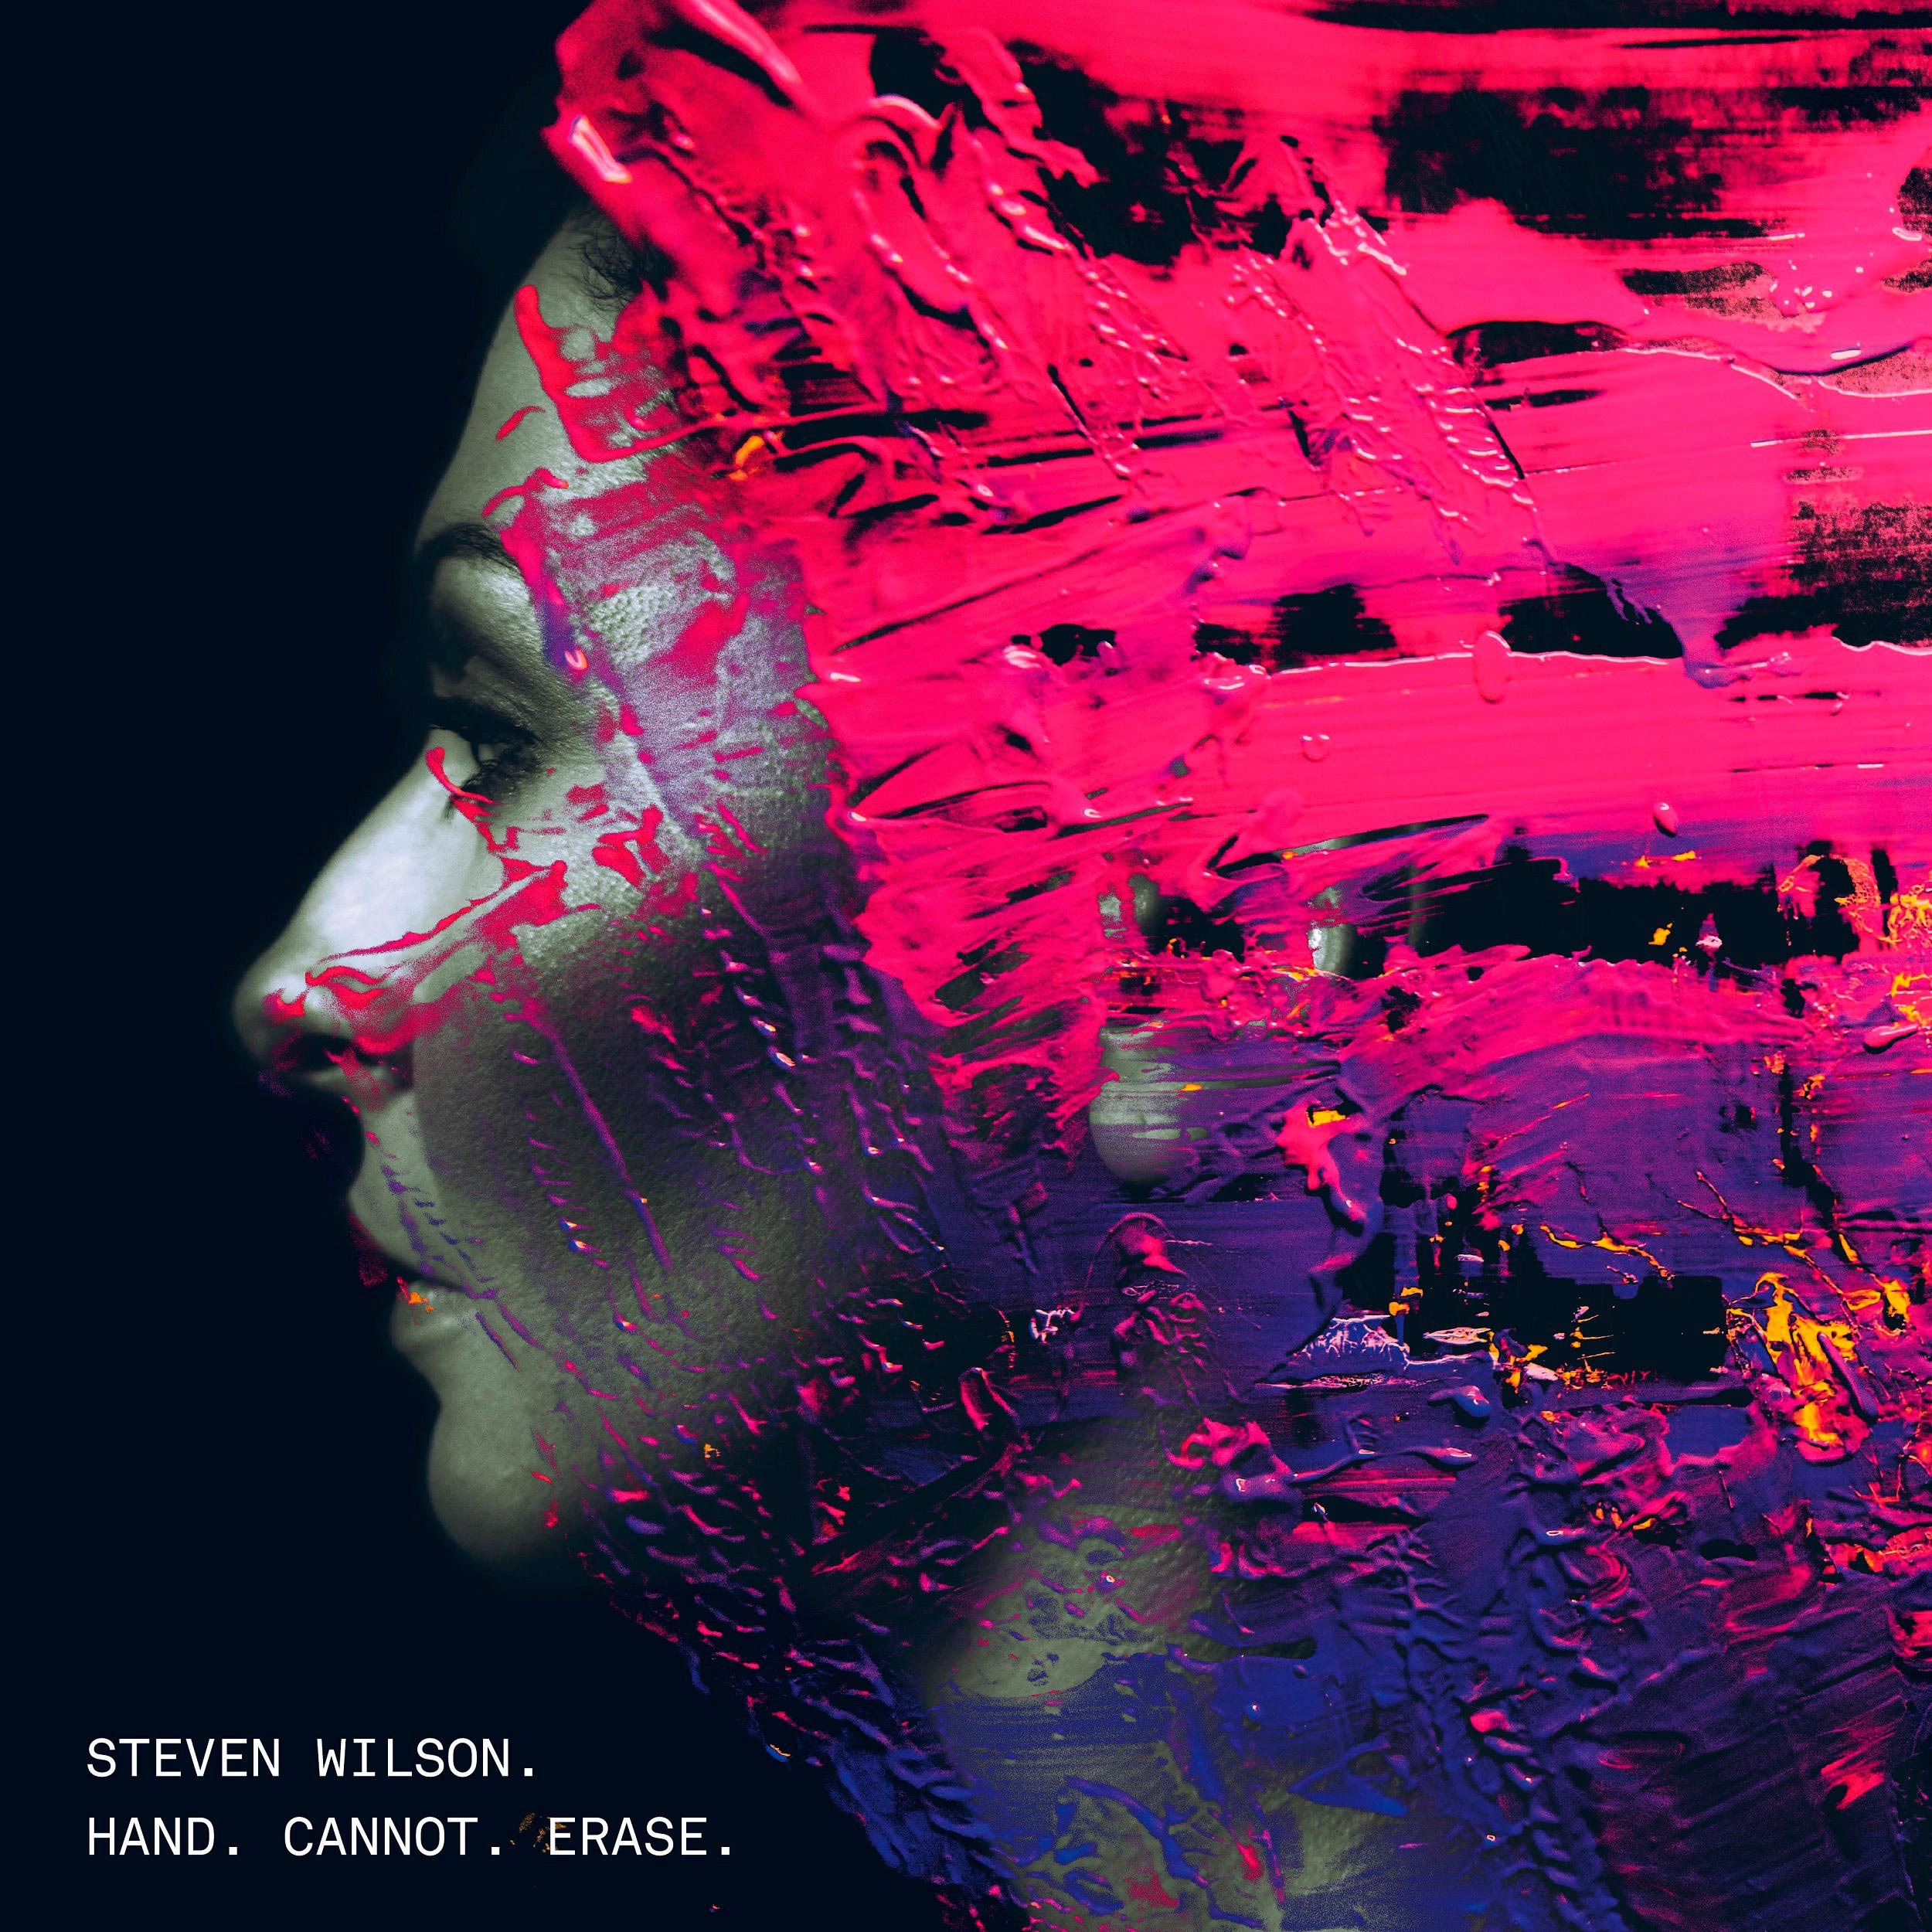 Steven Wilson - Hand. Cannot. Erase. (2015) [HDTracks FLAC 24bit/96kHz]